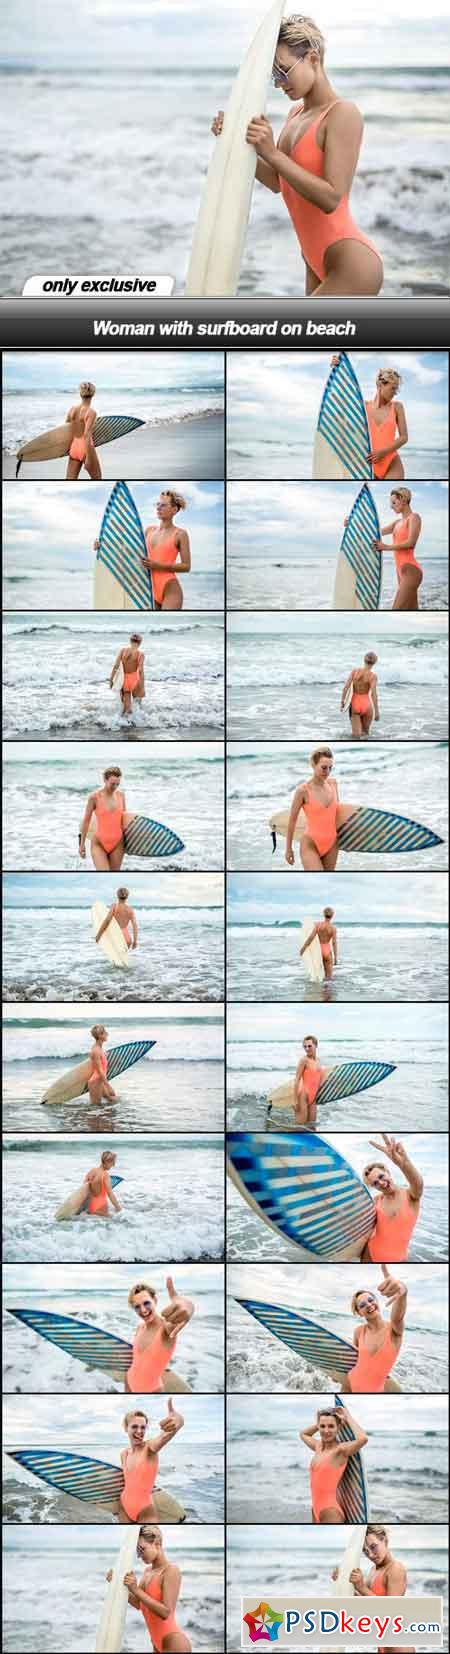 Woman with surfboard on beach - 20 UHQ JPEG